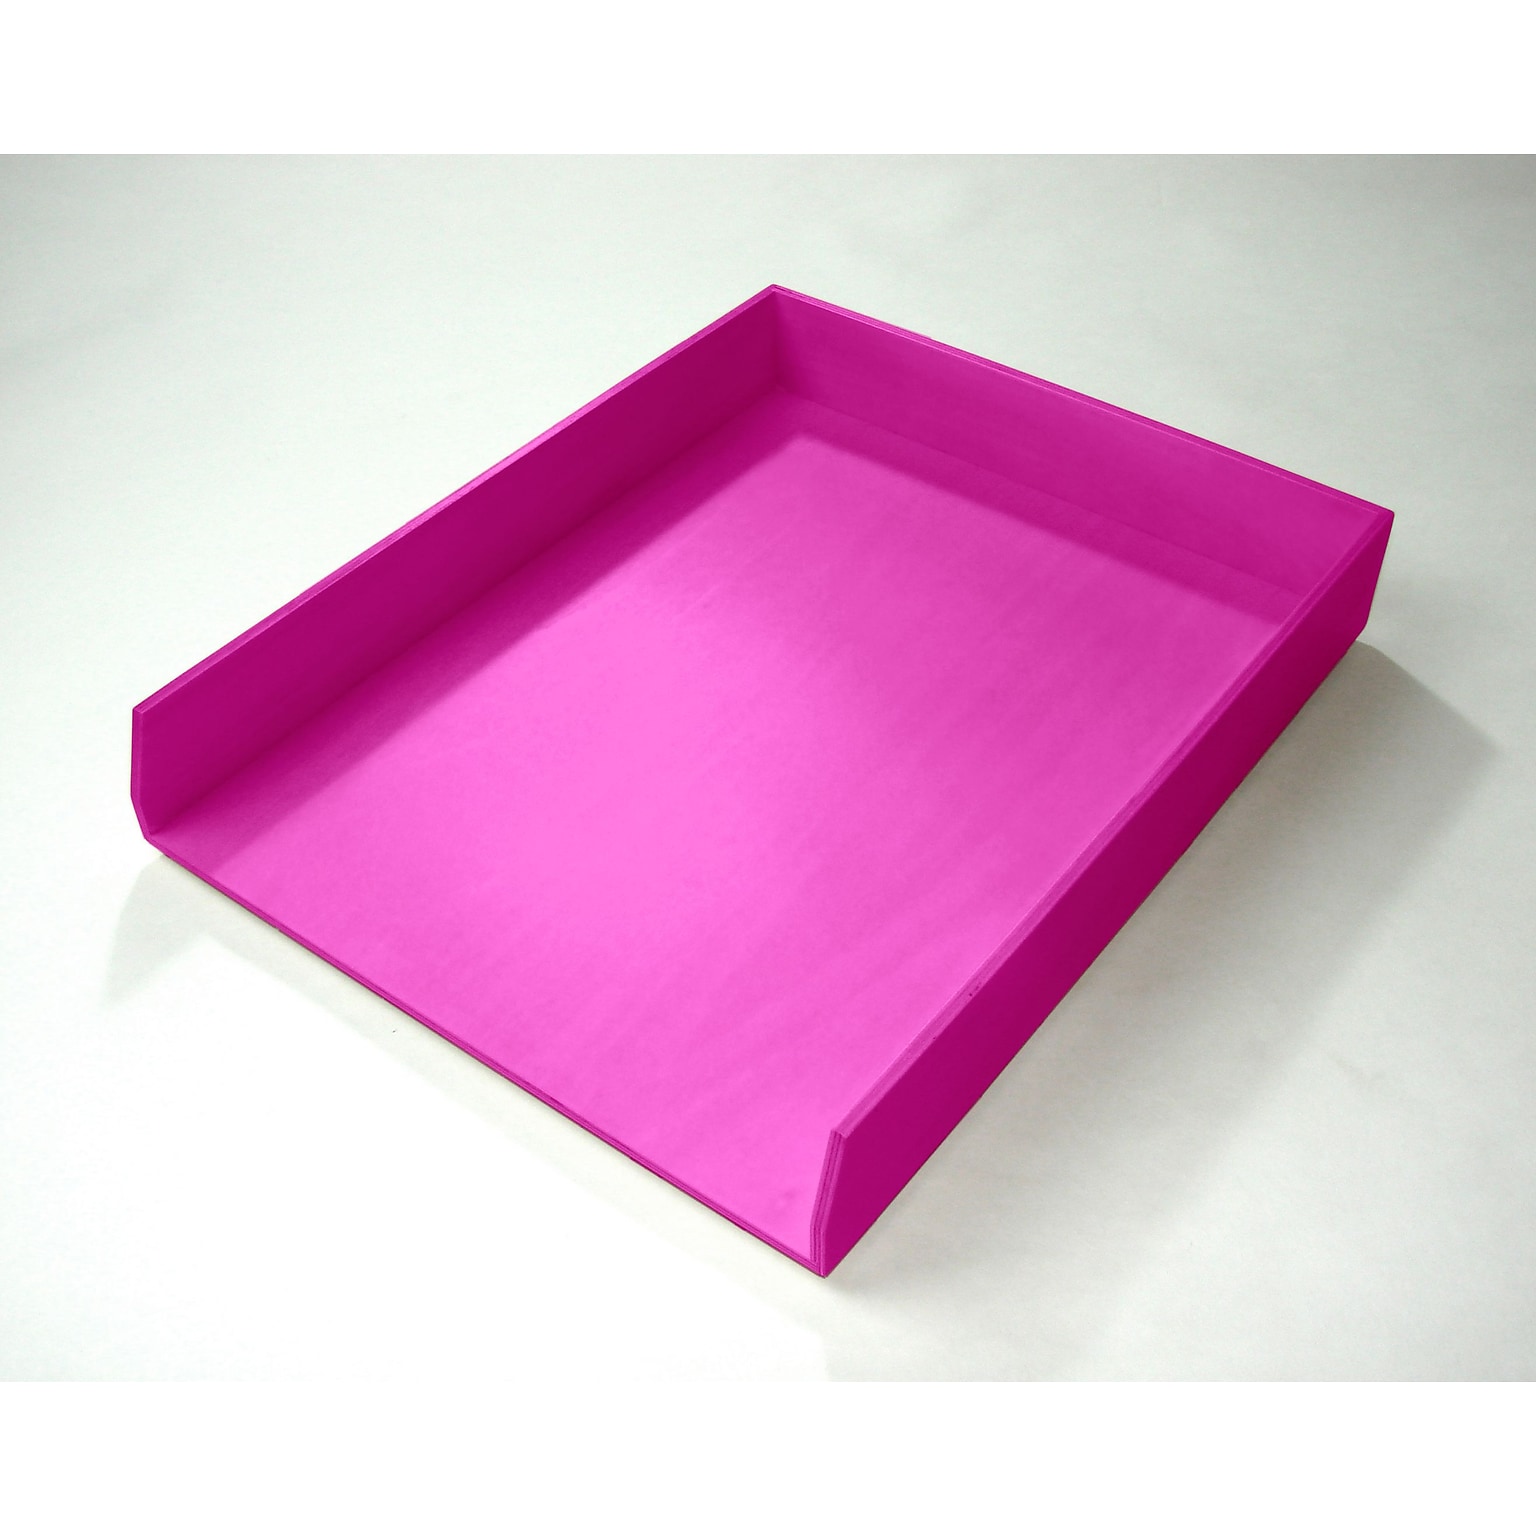 Bindertek Bright Wood Desk Stackable Letter Paper Tray; Pink (BTLTRAY-PK)